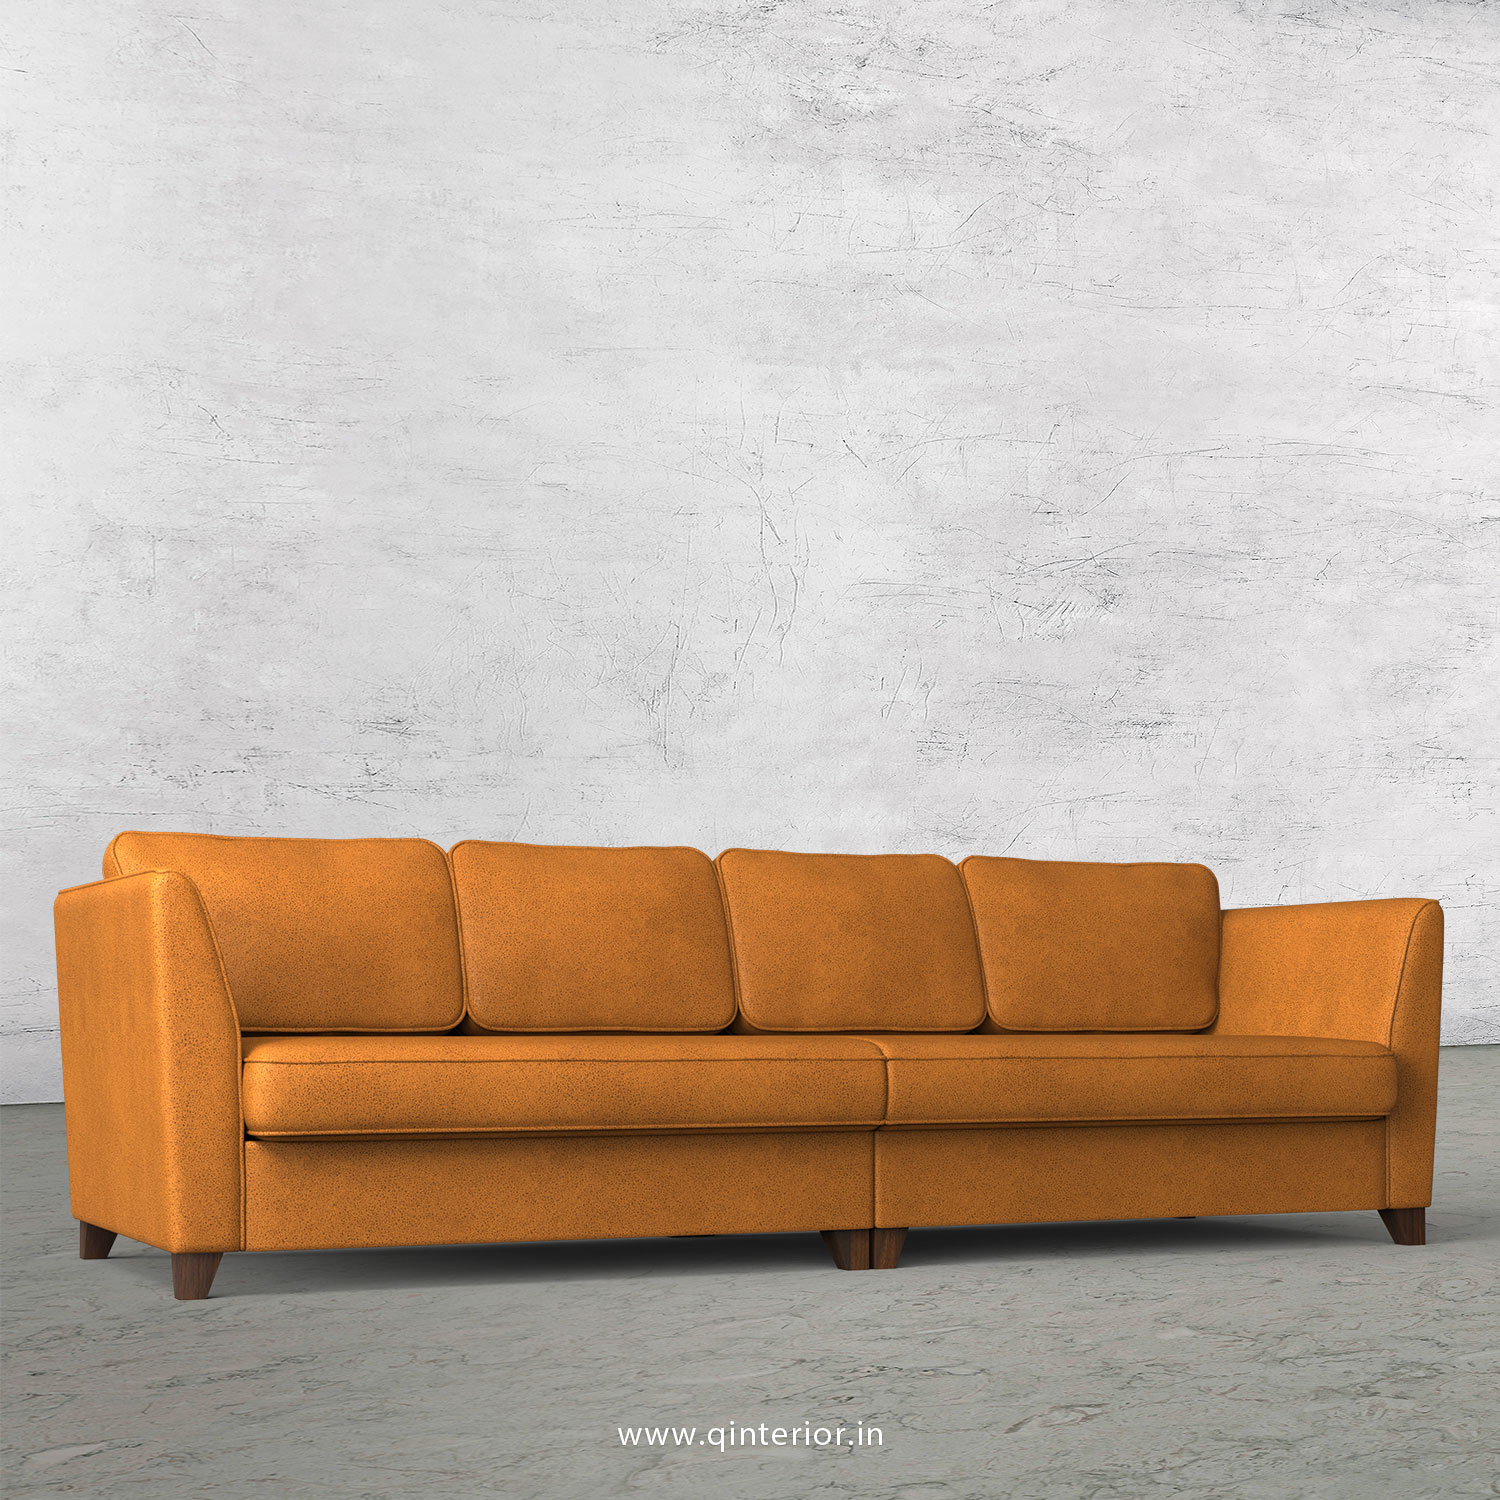 Kingstone 4 Seater Sofa in Fab Leather Fabric - SFA004 FL14